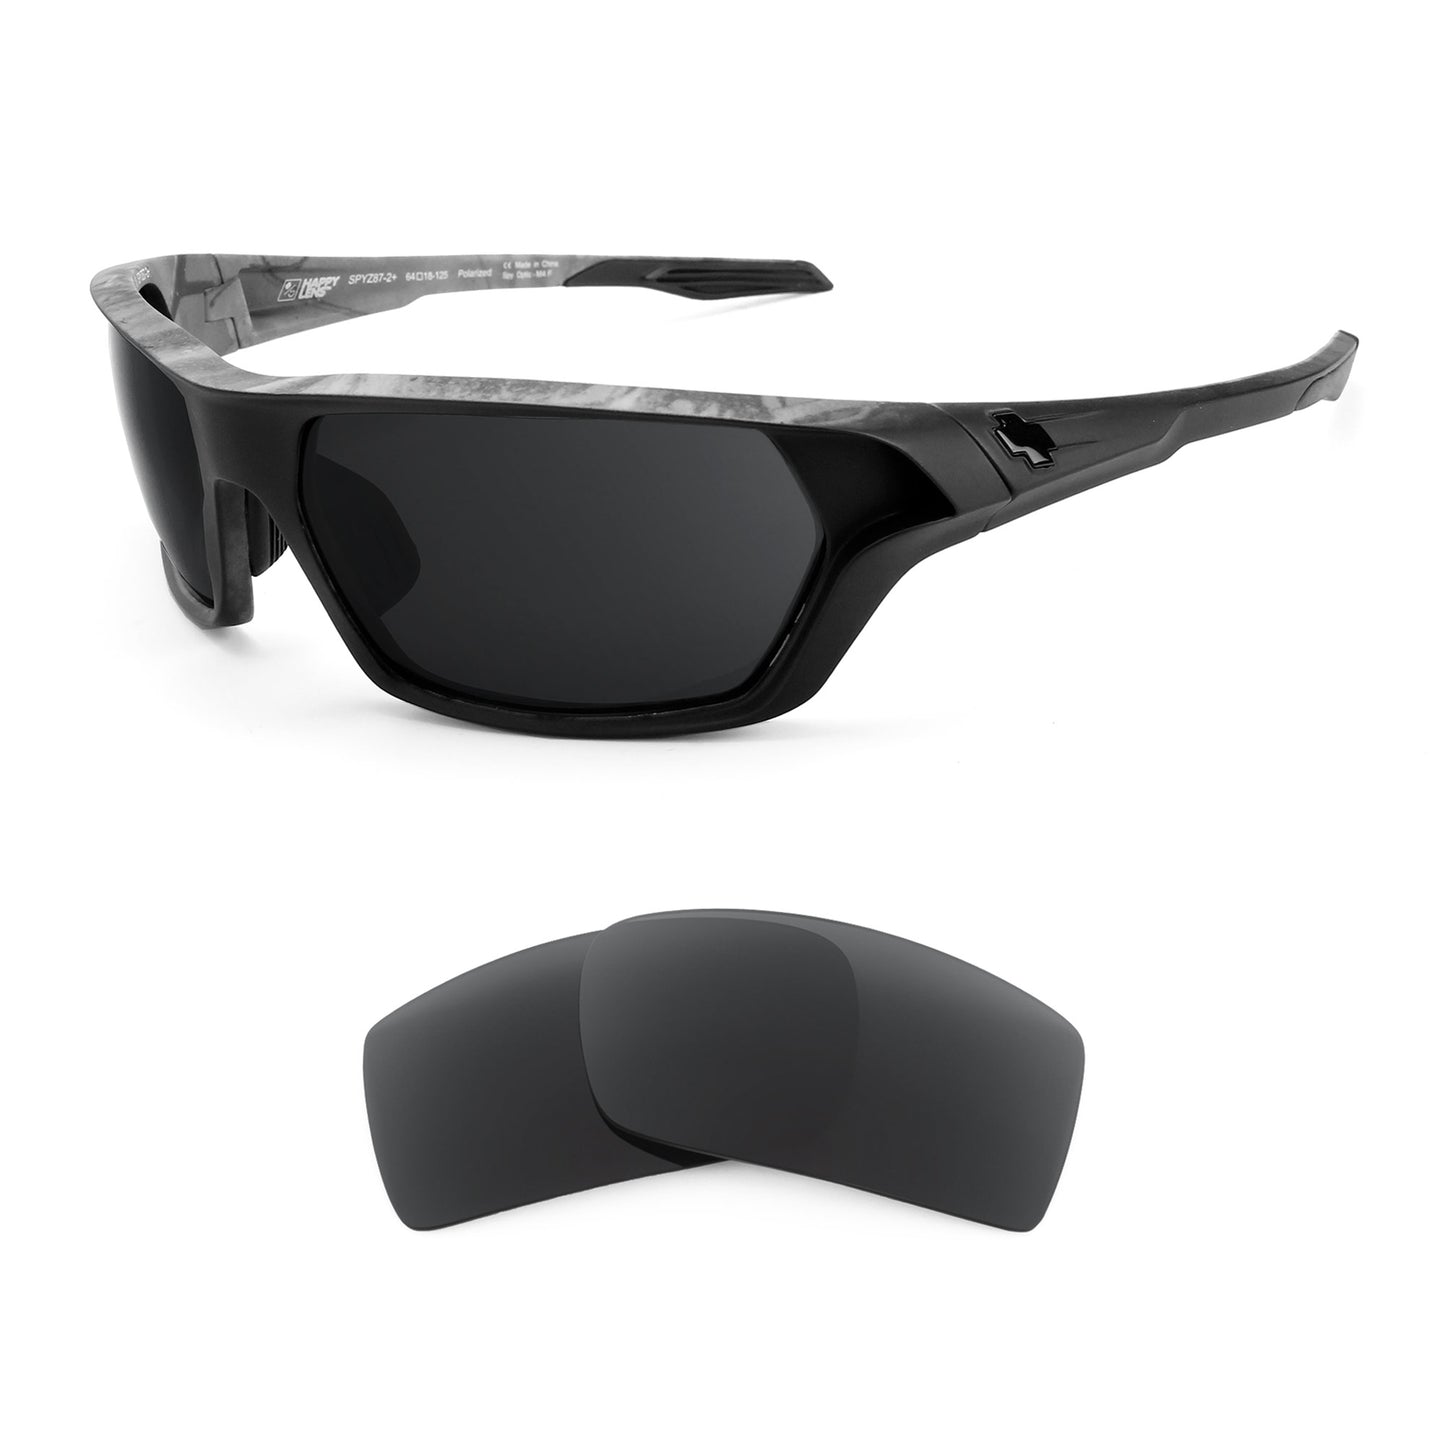 Spy Optic Quanta sunglasses with replacement lenses